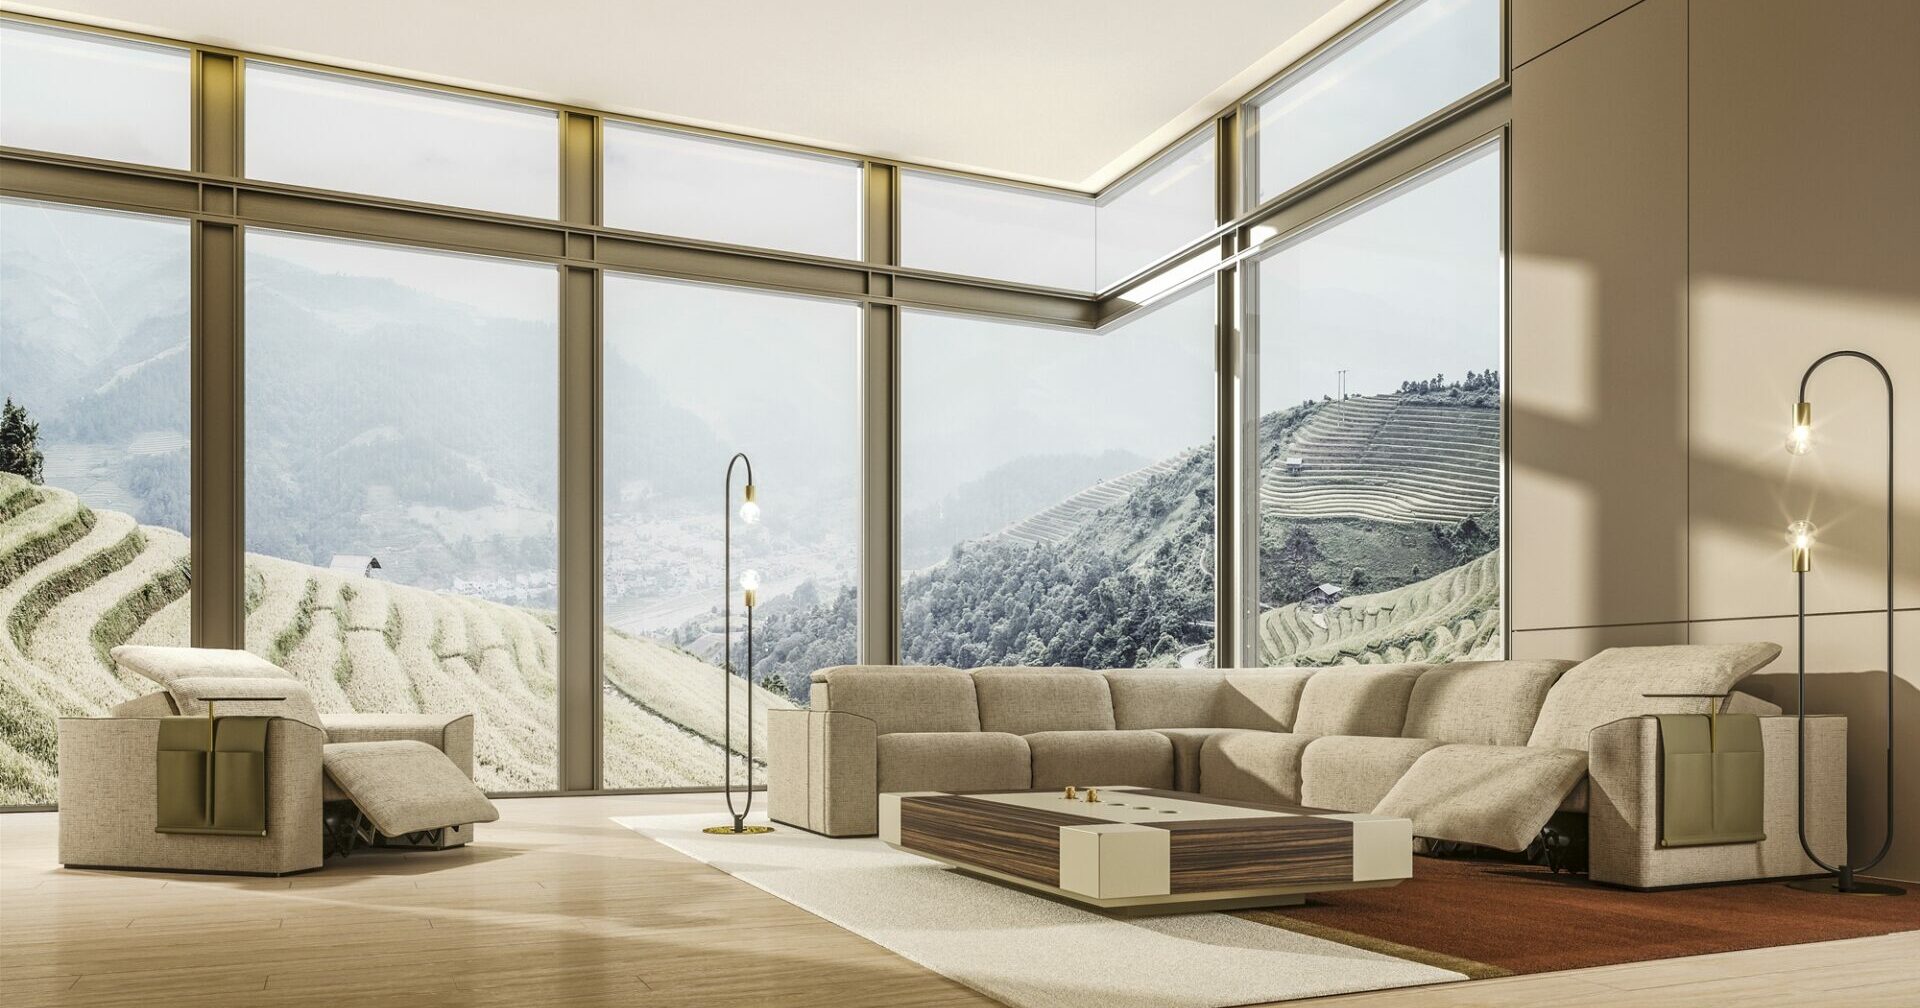 Salone del Mobile modular reclining sofa kubrik